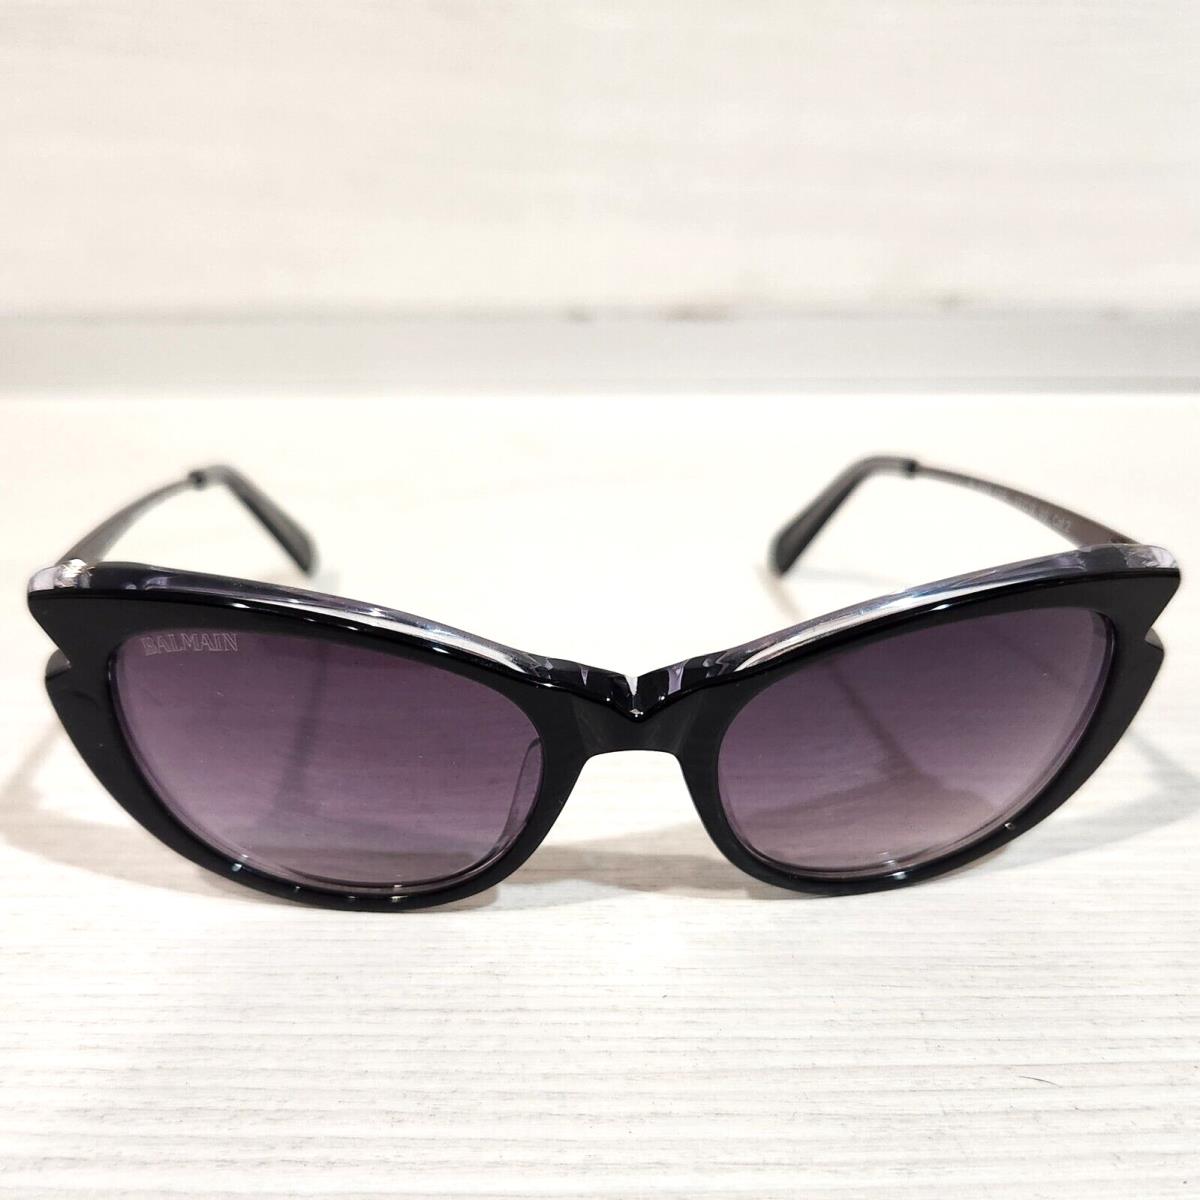 Balmain BL 2023 C03 Black Sunglasses 53-19-140 Made In France Cat.2